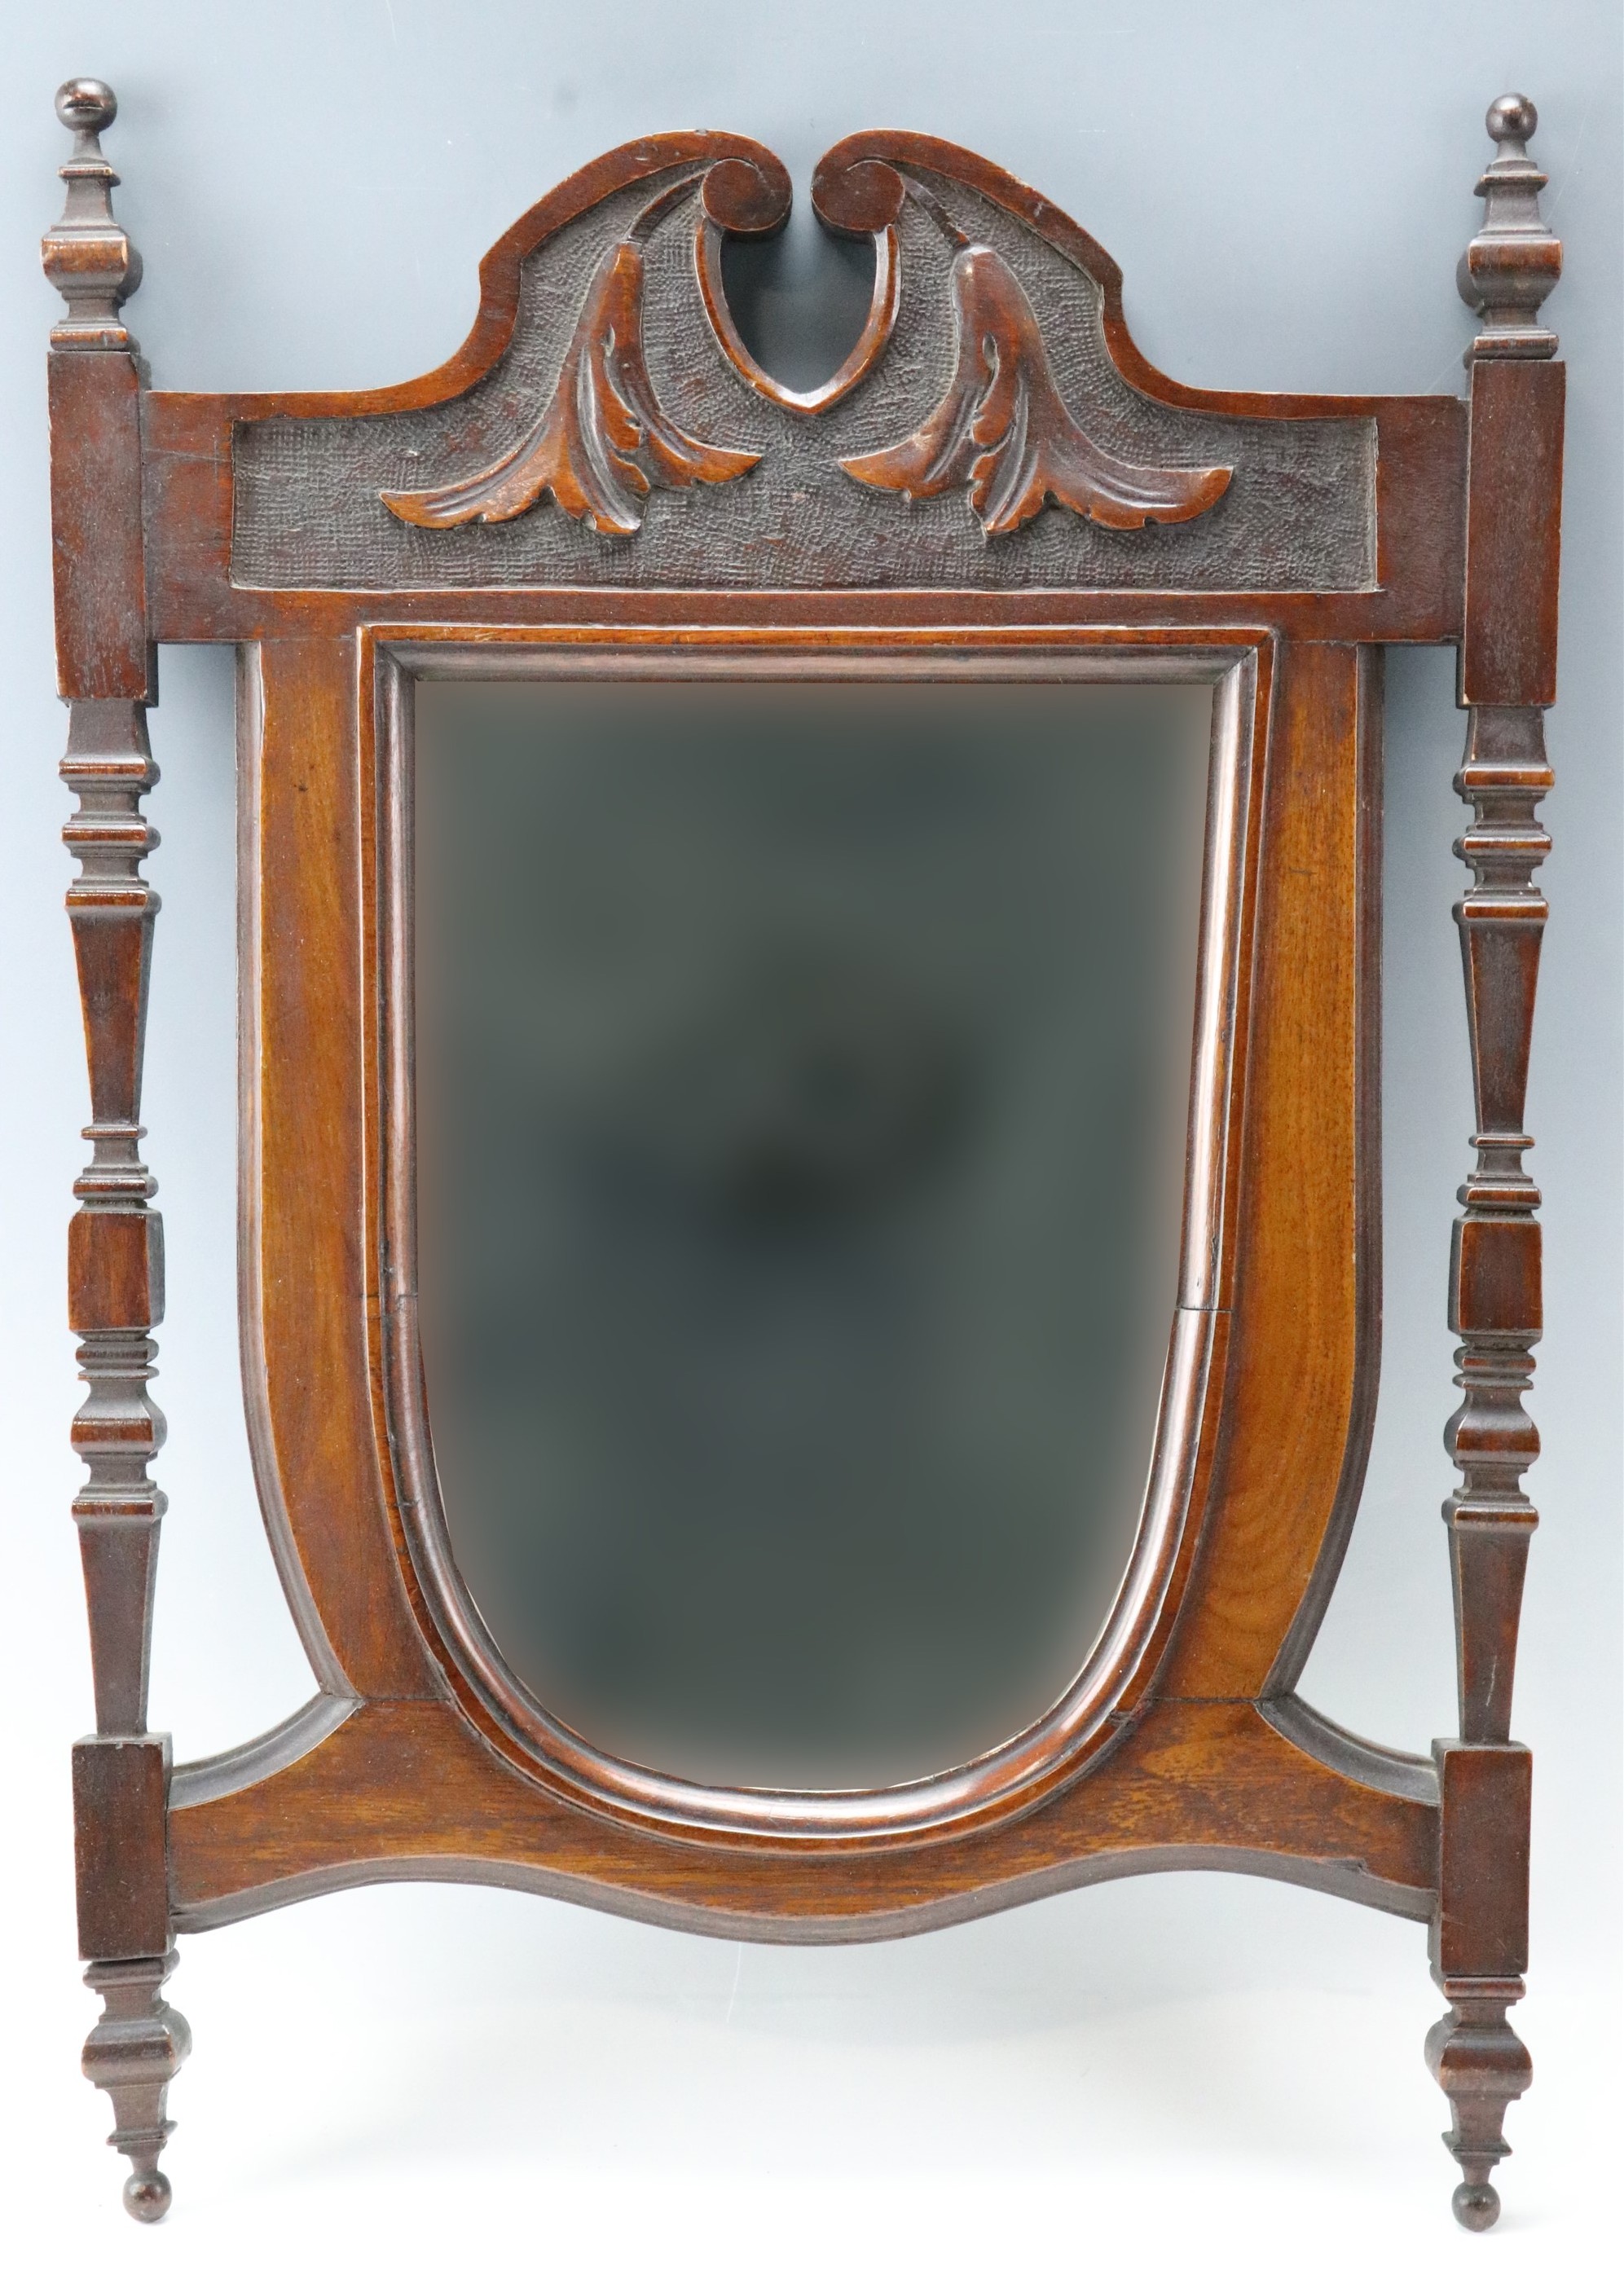 A Victorian mahogany-framed shield-shaped wall mirror, 52 cm x 37 cm